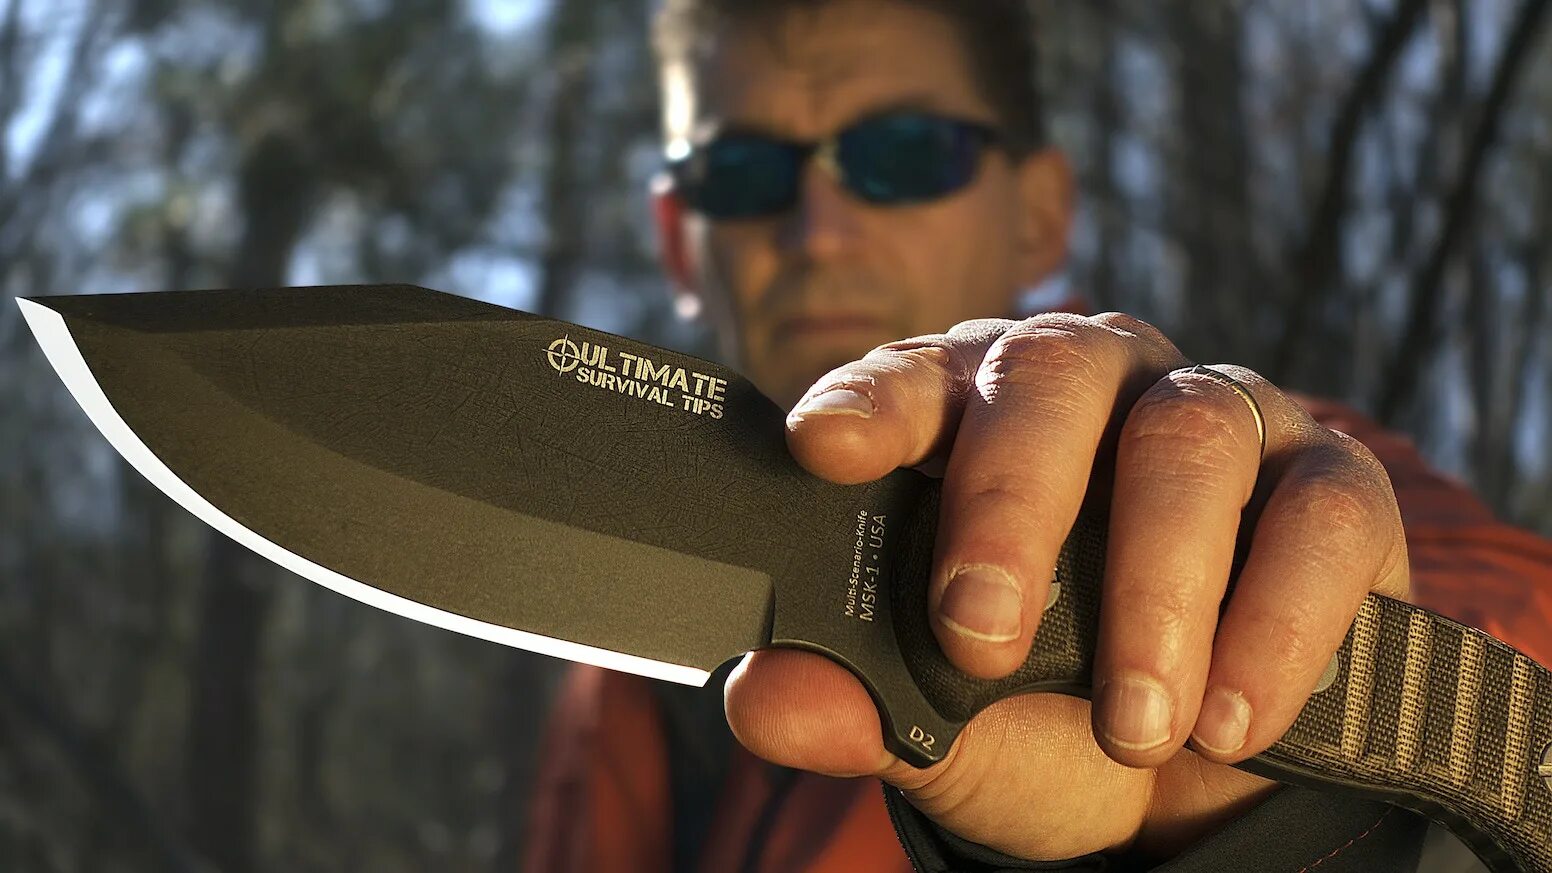 Msk-1 Survival Knife. Cut 1 нож. Нож Outdoor Mate. Survival Knife нож охотничий. Ножевой видео